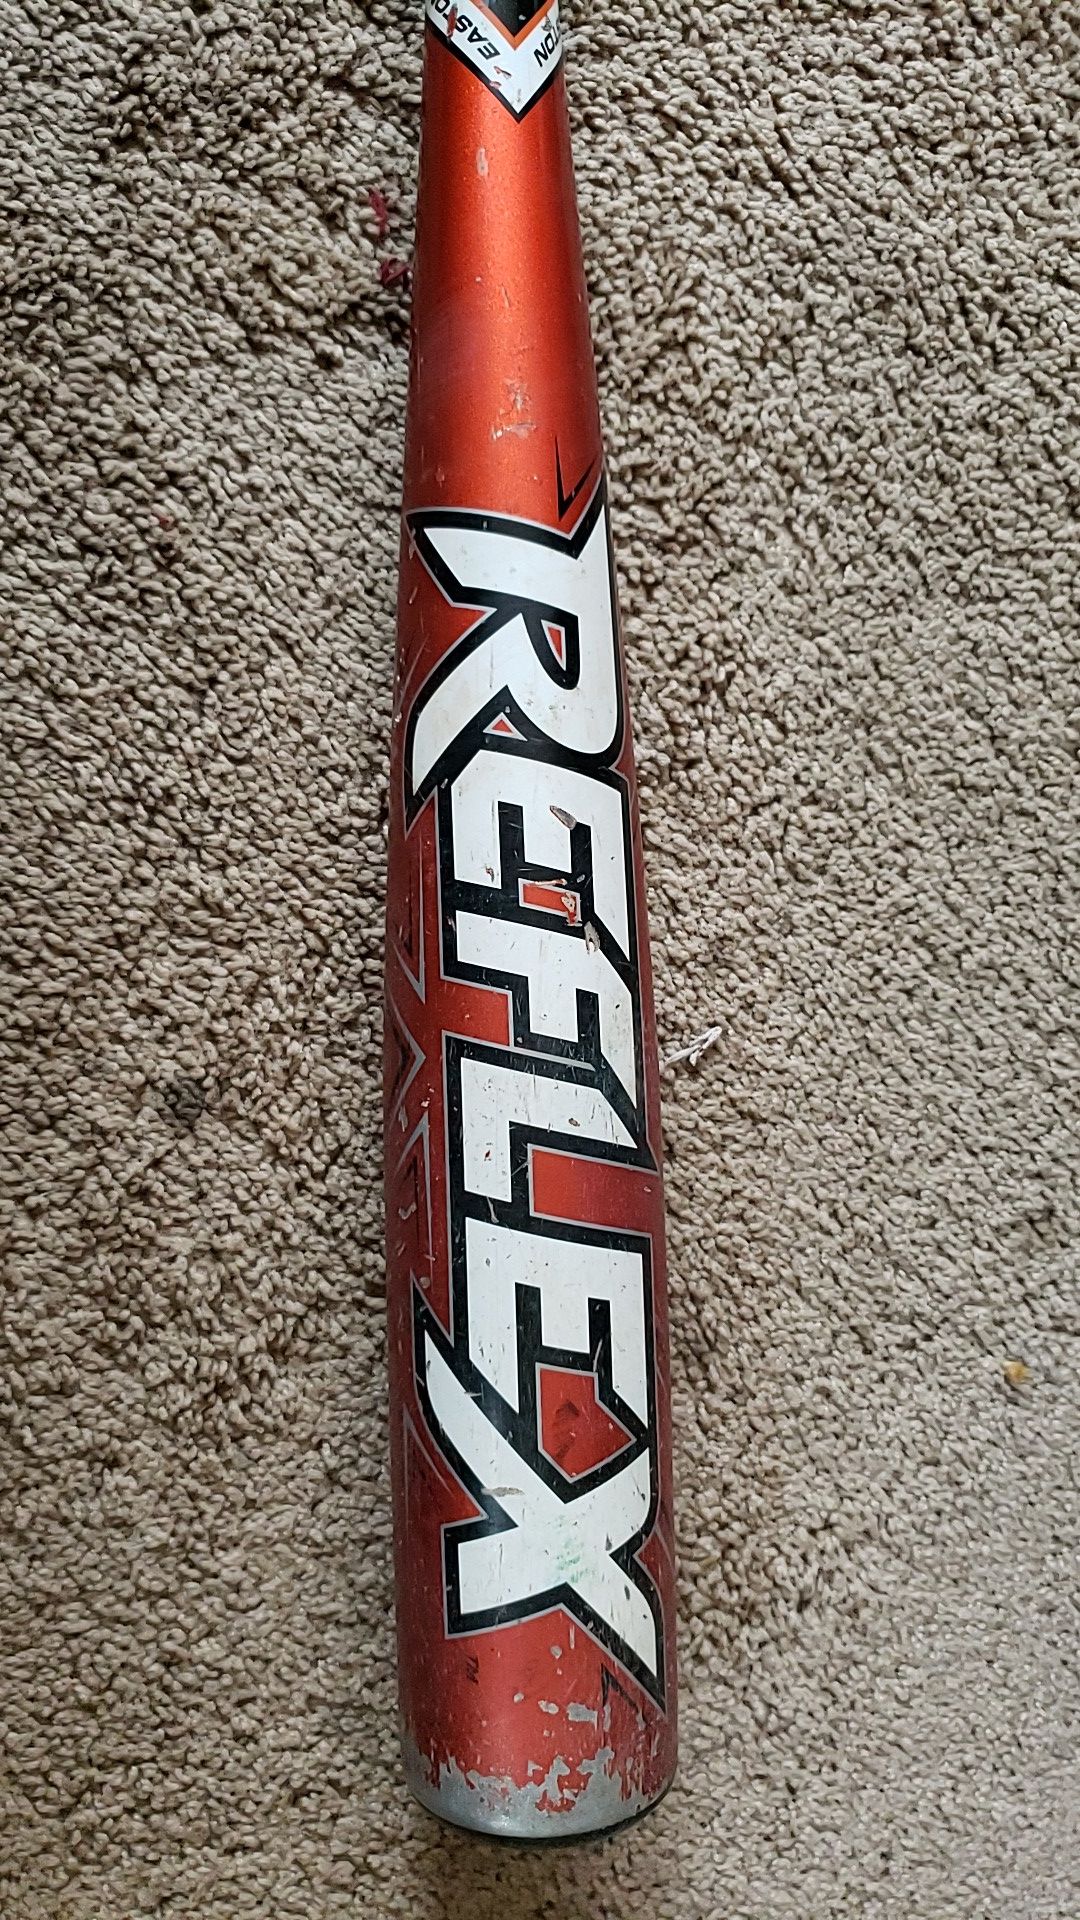 Reflex 35/30 baseball bat